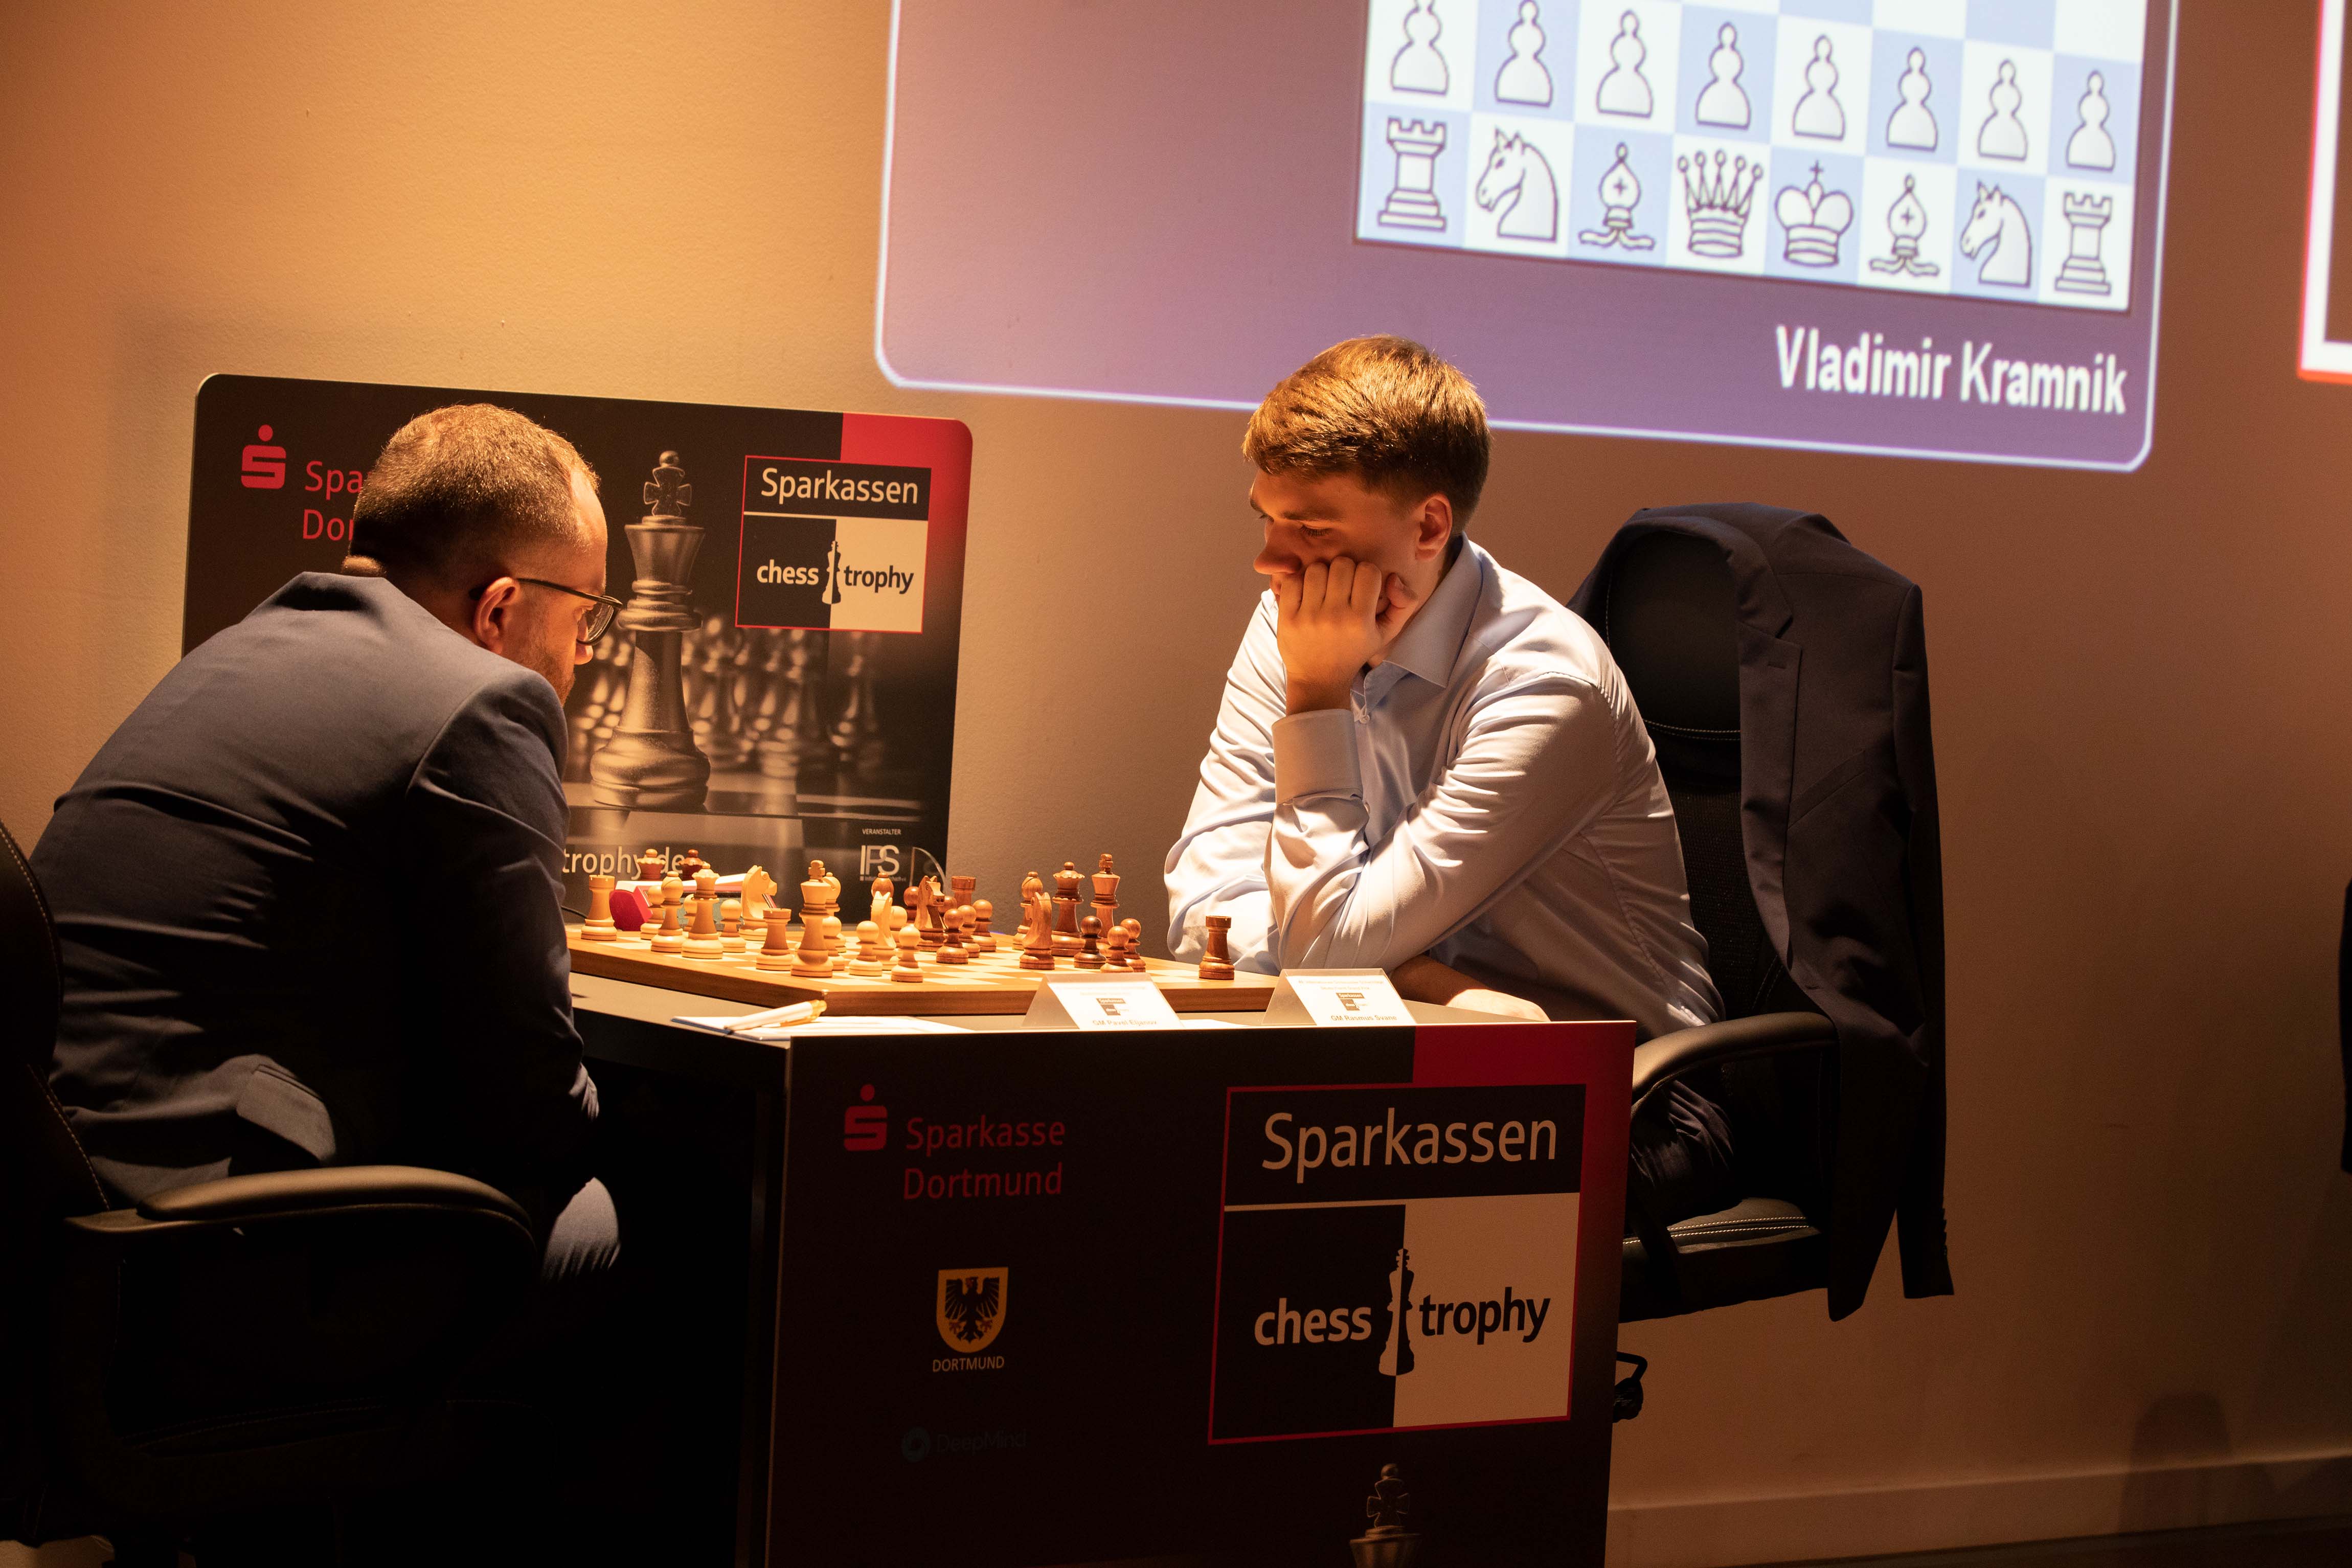 Third German national Player registered for 50th International Dortmund Chess Days